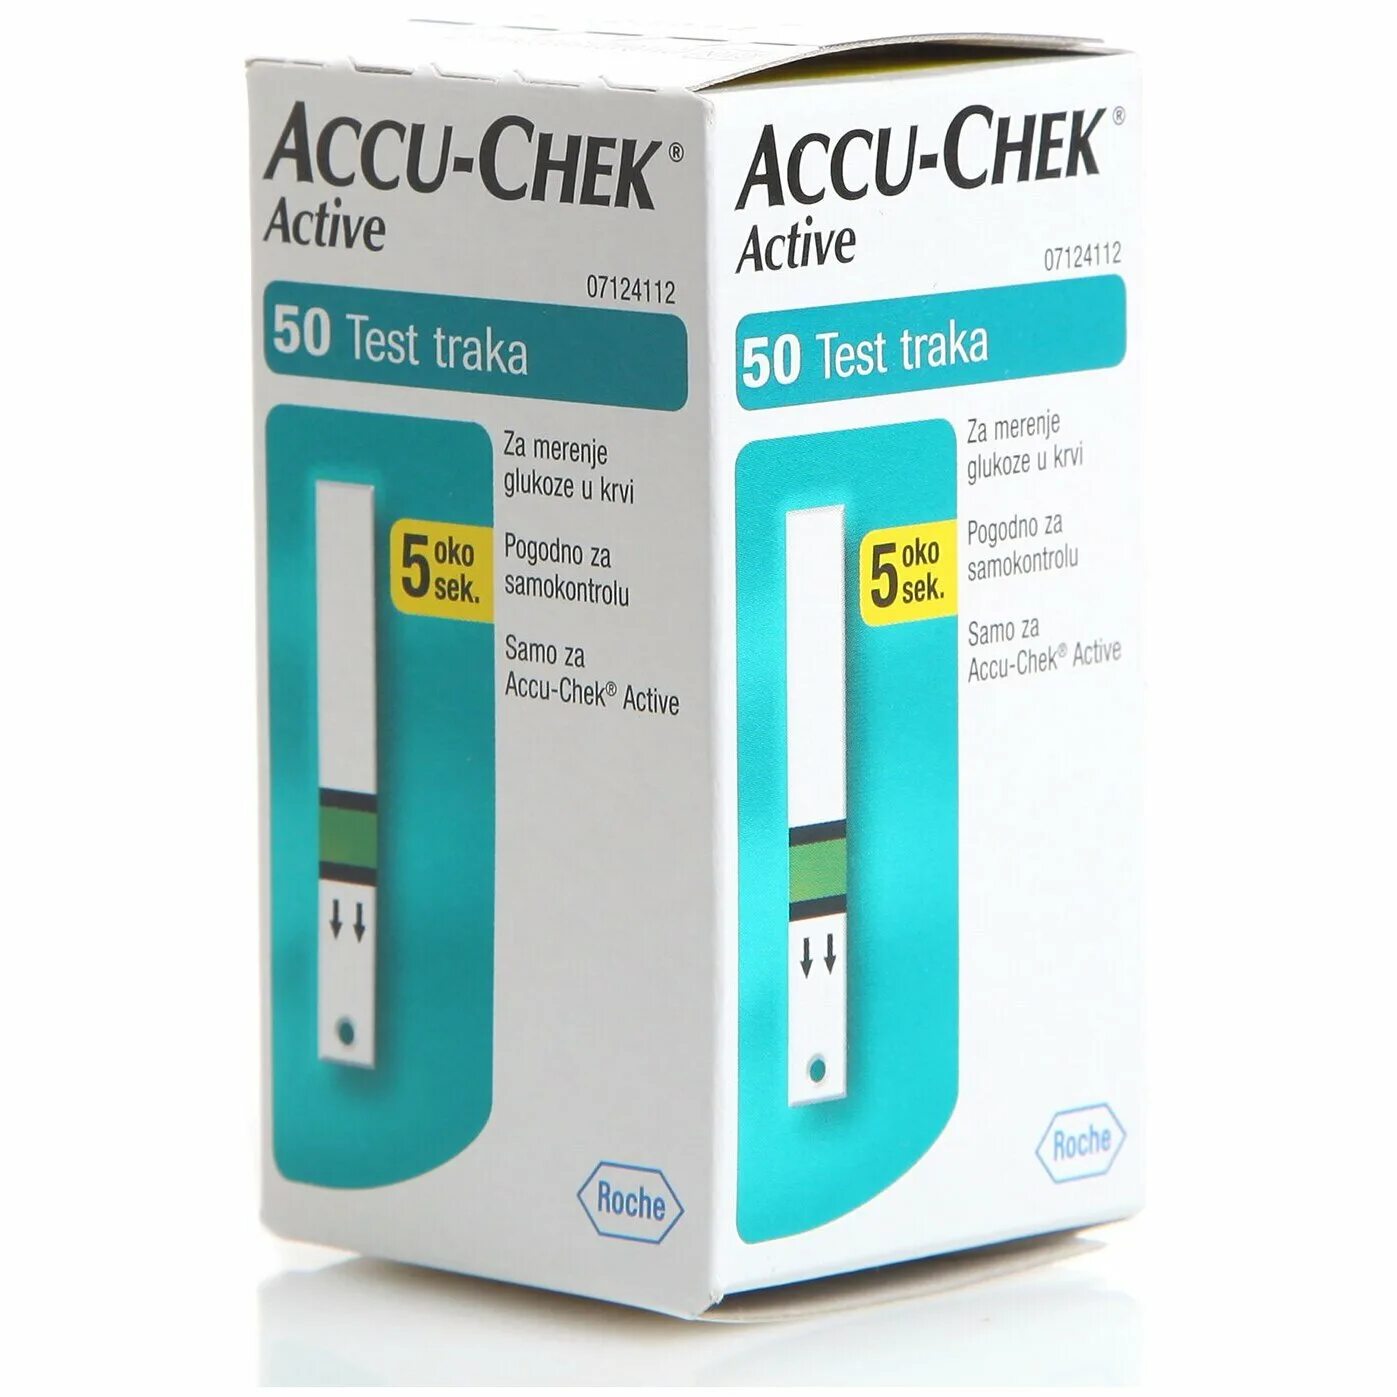 Accu-Chek тест-полоски Active. Тест полоски Accu Chek Active 50. Accu-Chek Active тест-полоски 50шт. Акку-чек (Accu-Chek) тест-полоски Актив 100 шт. Рош диагностикс ГМБХ. Акки дешевые актив